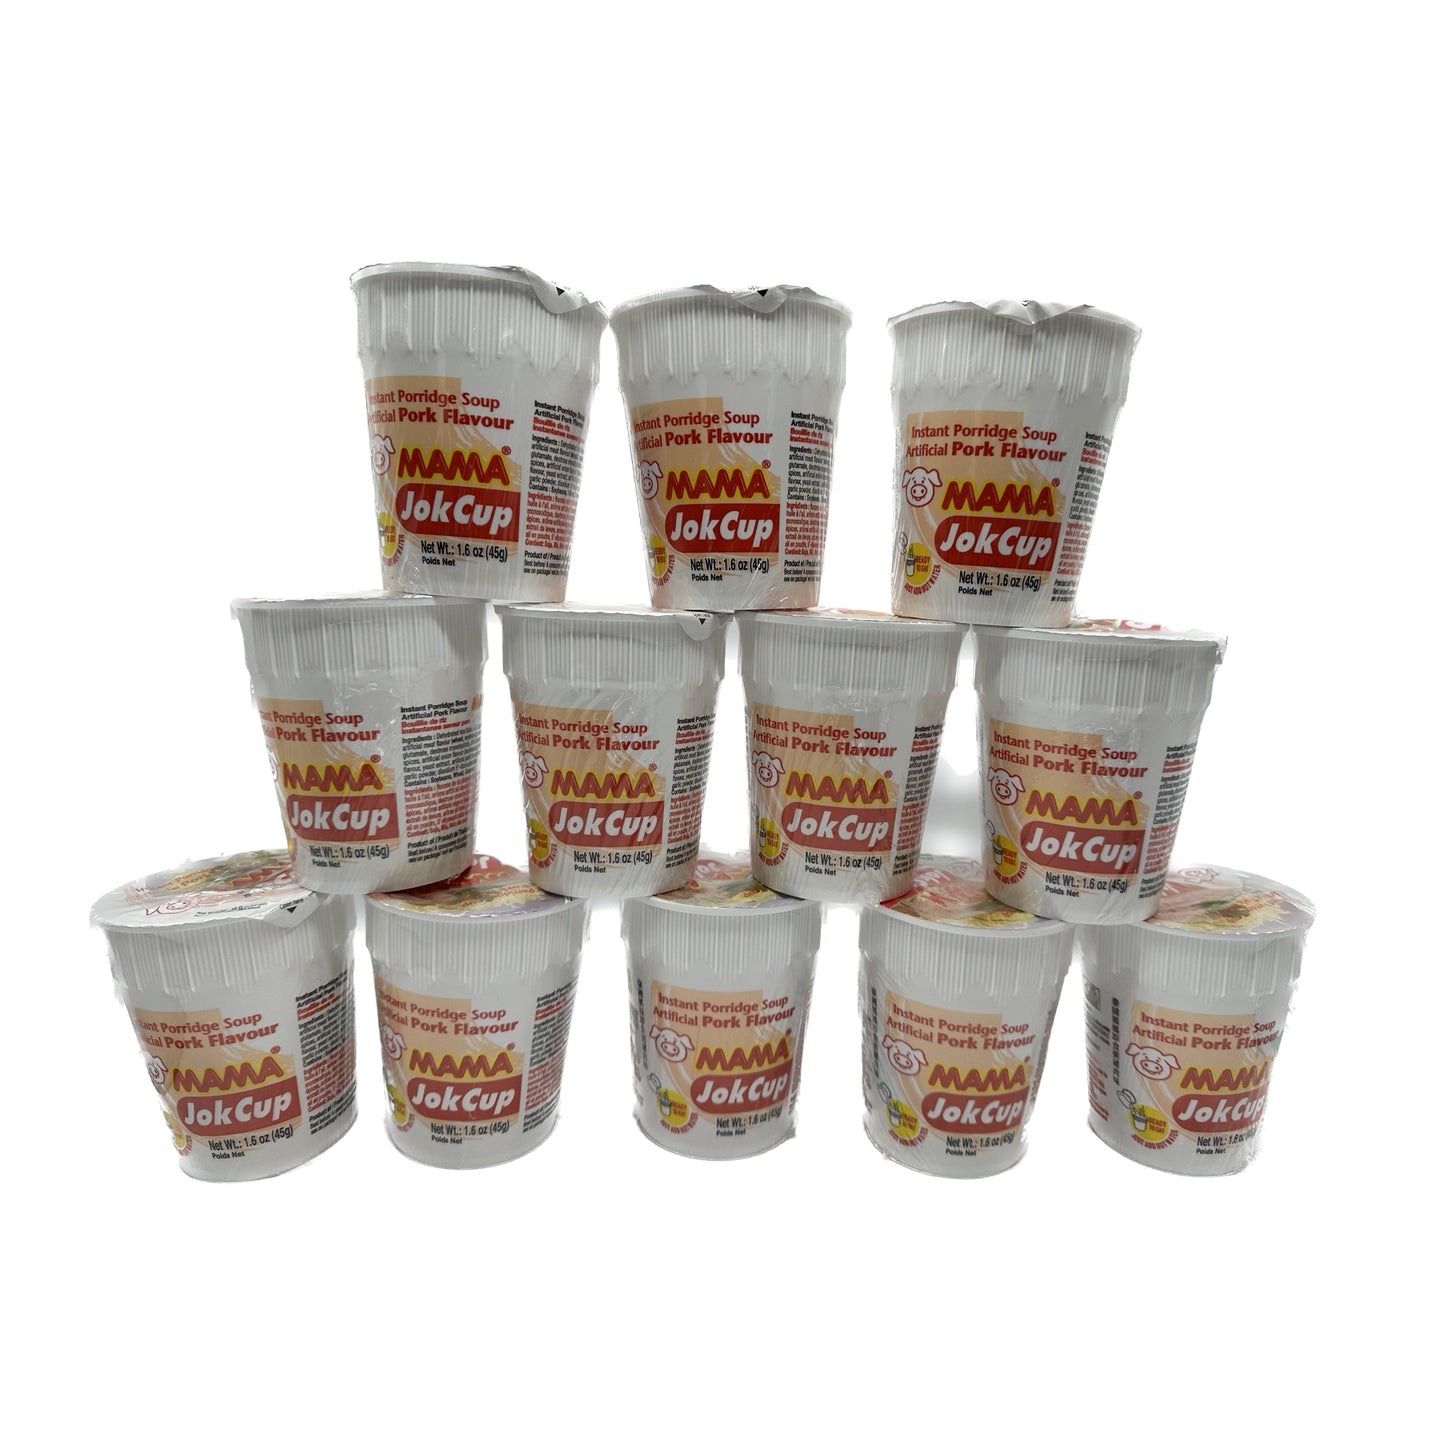 Mama Instant Porridge Soup Cup Jok Artificial Pork Flavor มาม่าโจ๊กคัพ รสหมู (ถ้วย) - 12x45g (1 Case)